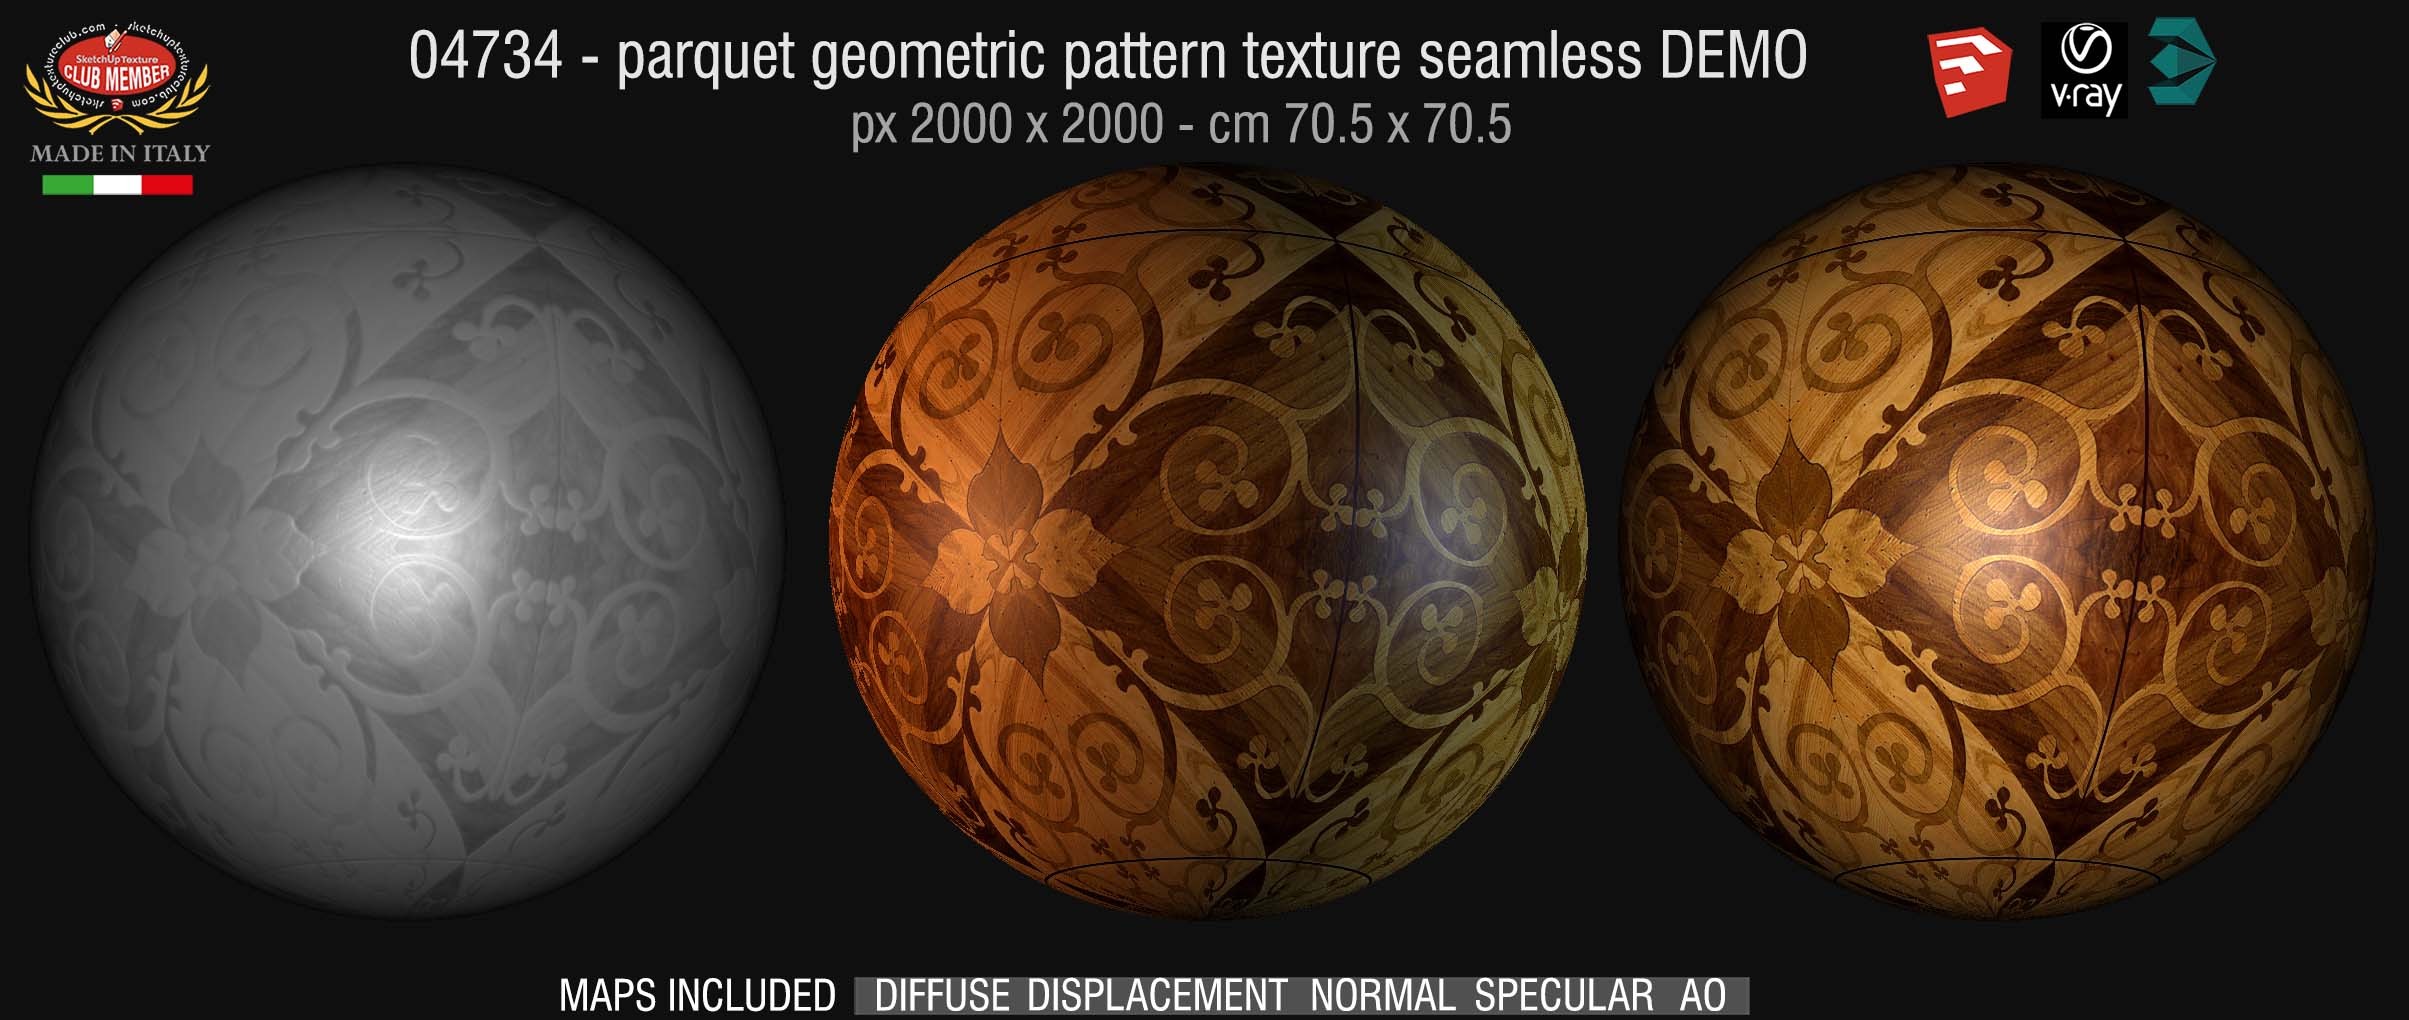 04734 HR Parquet geometric pattern texture seamless + maps DEMO